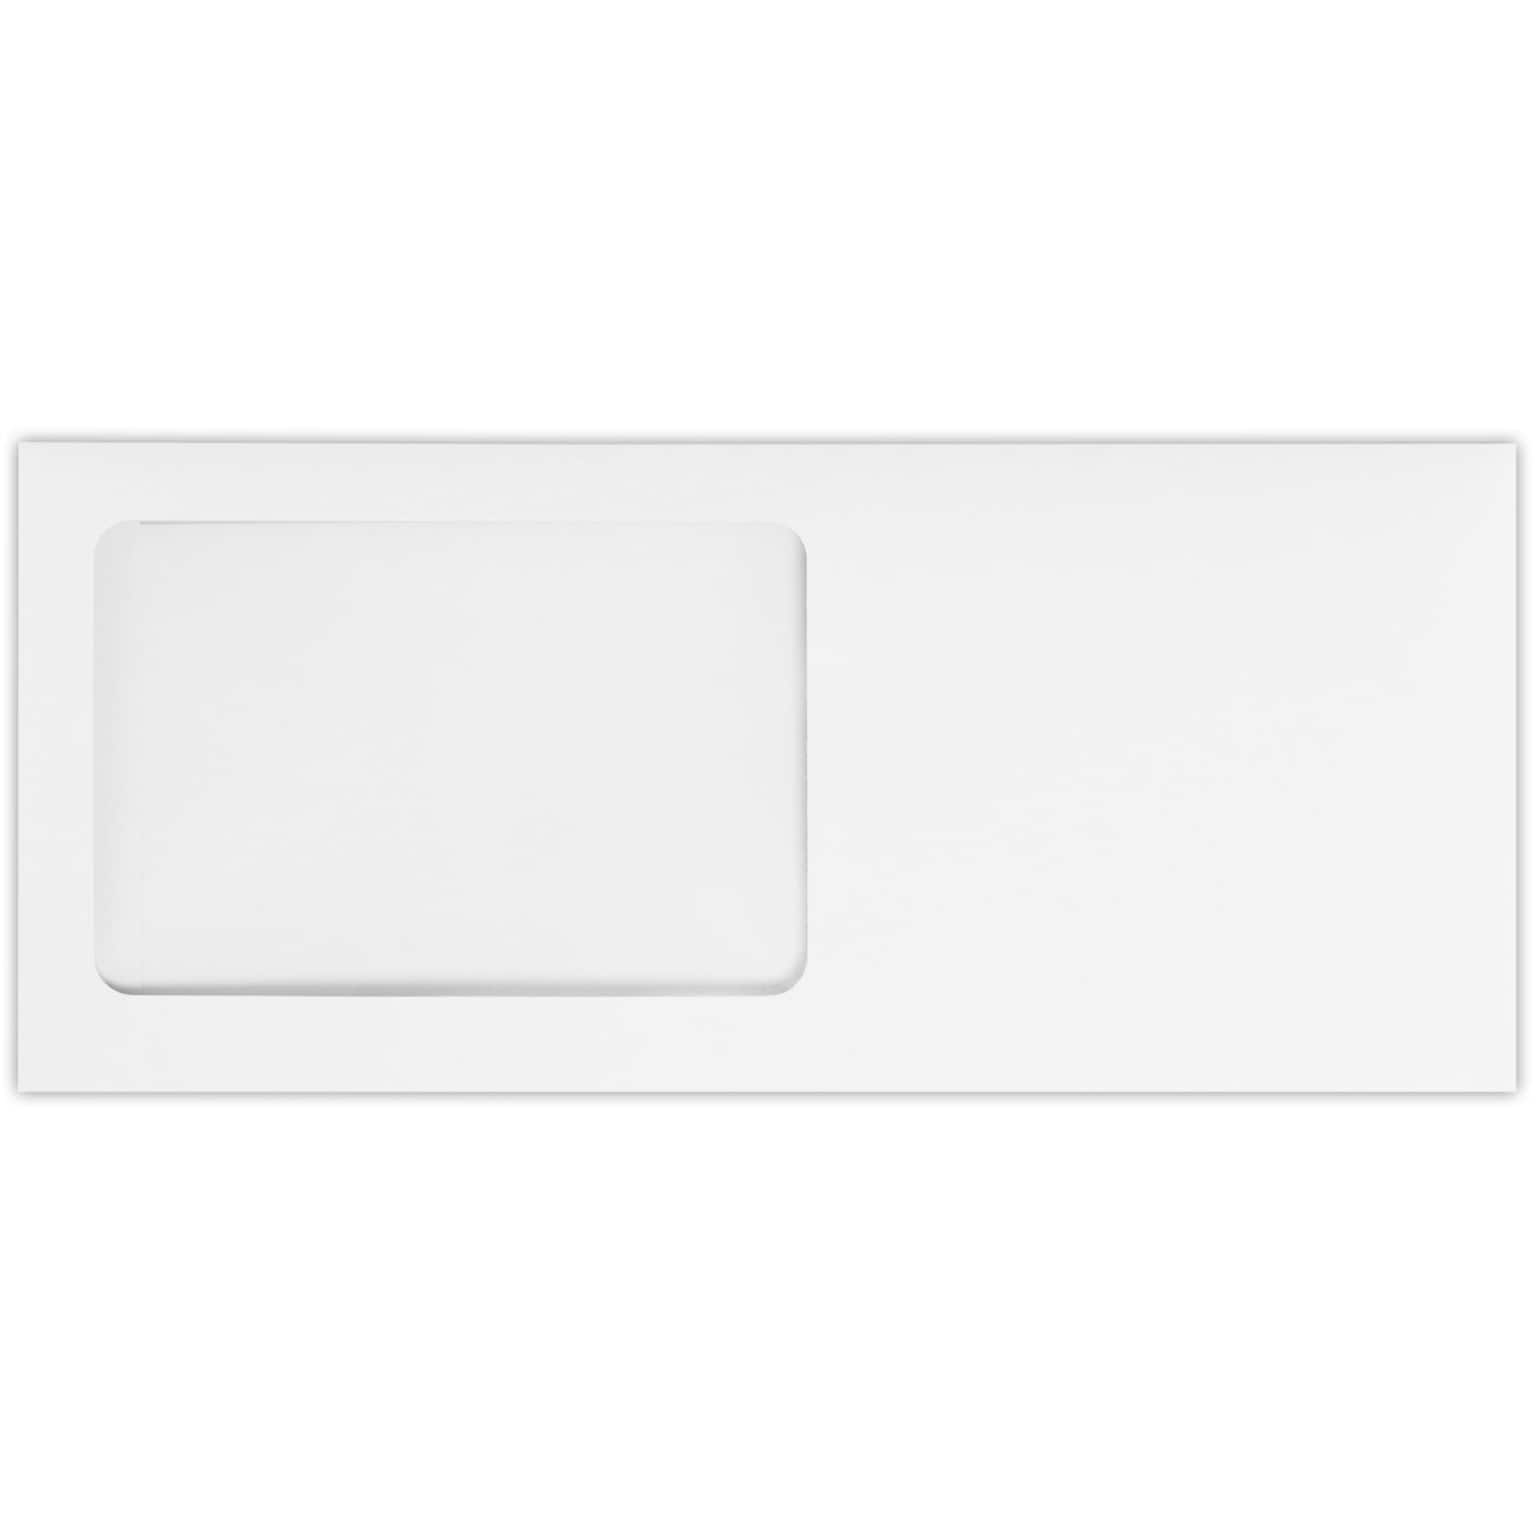 LUX Self Seal #10 Window Envelope, 4 1/2 x 9 1/2, White Wove, 50/Pack (10APW-WW-50)